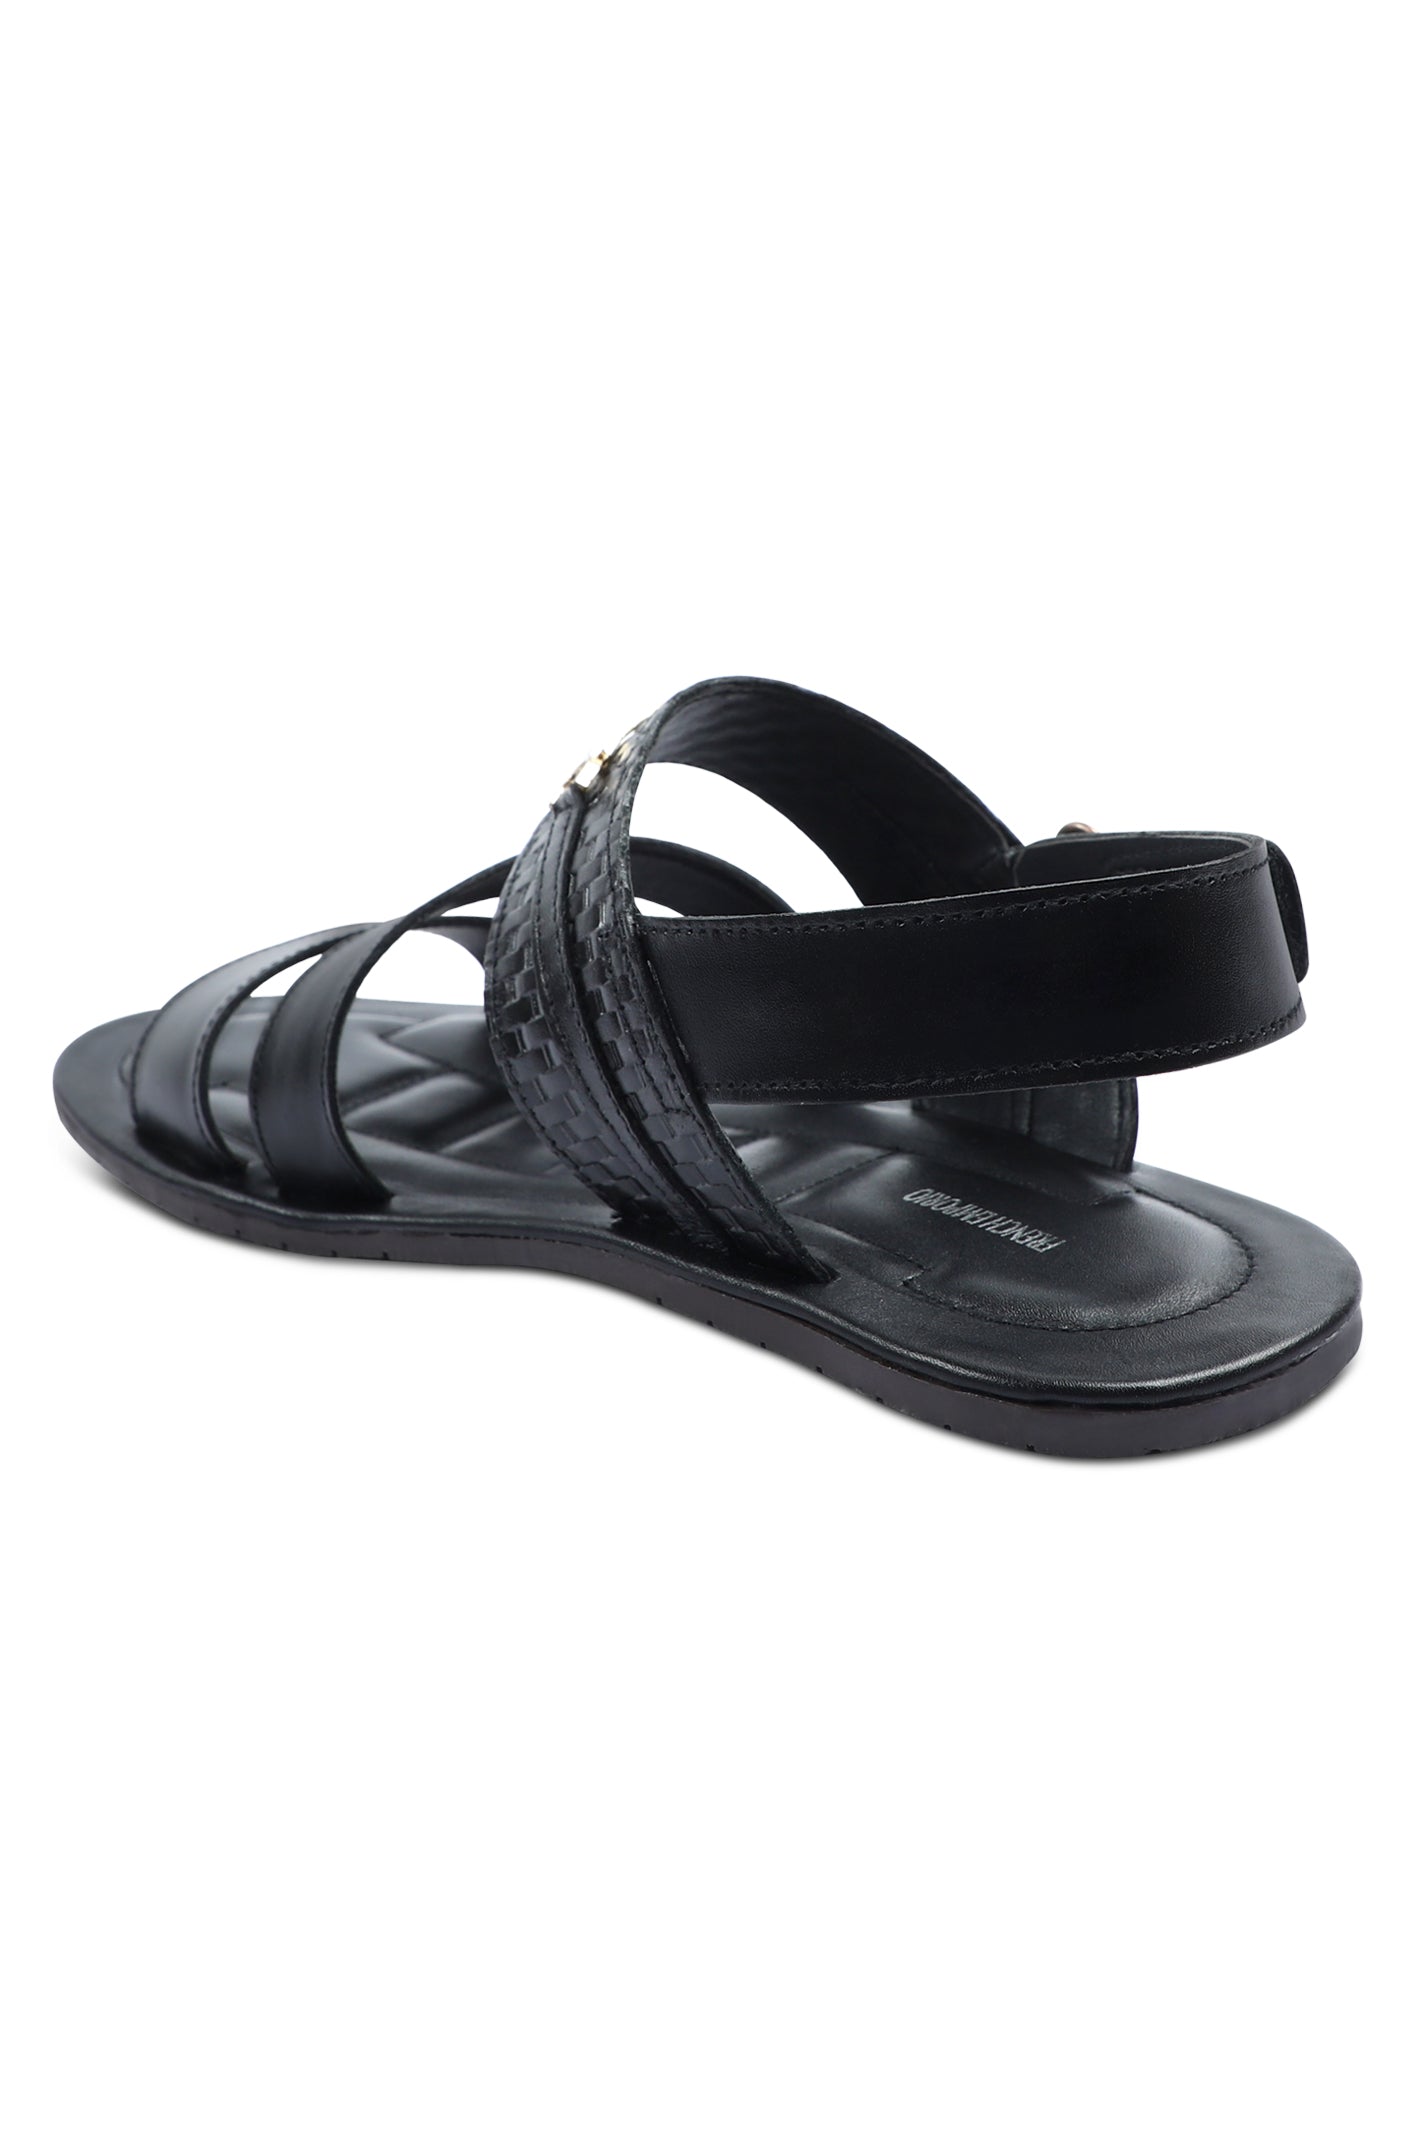 French Emporio Men Sandals SKU: SLD-0028-BLACK - Diners